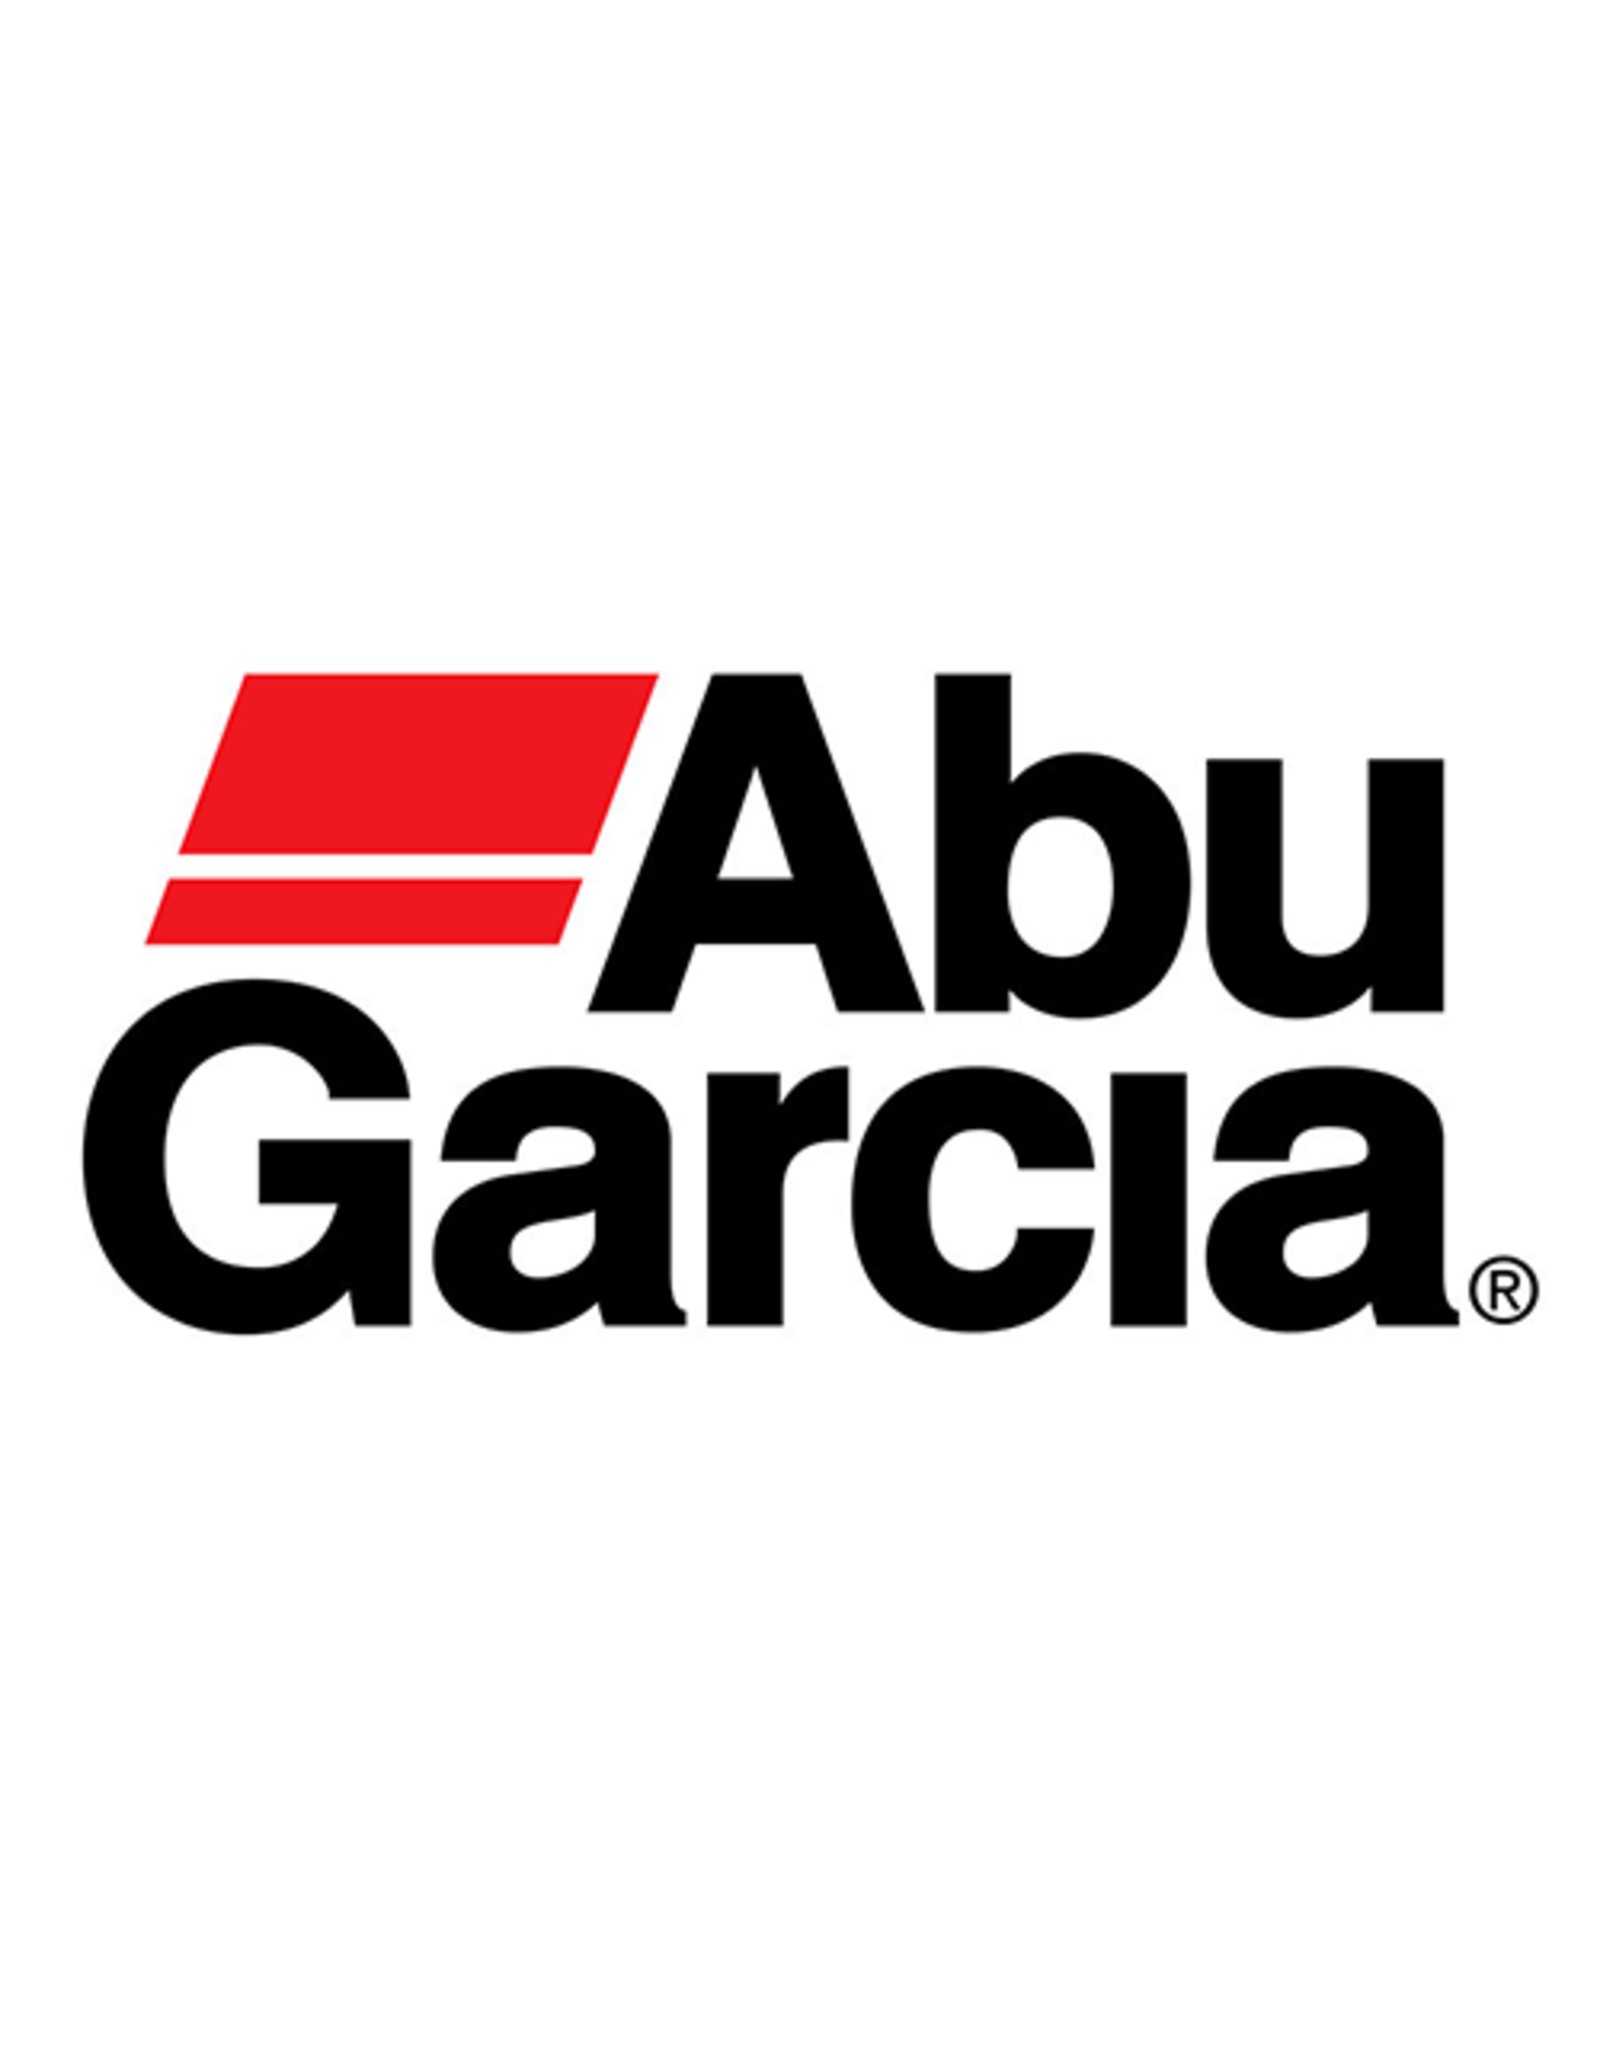 Abu Garcia 21492  THUMB BAR GUIDE/ NLA